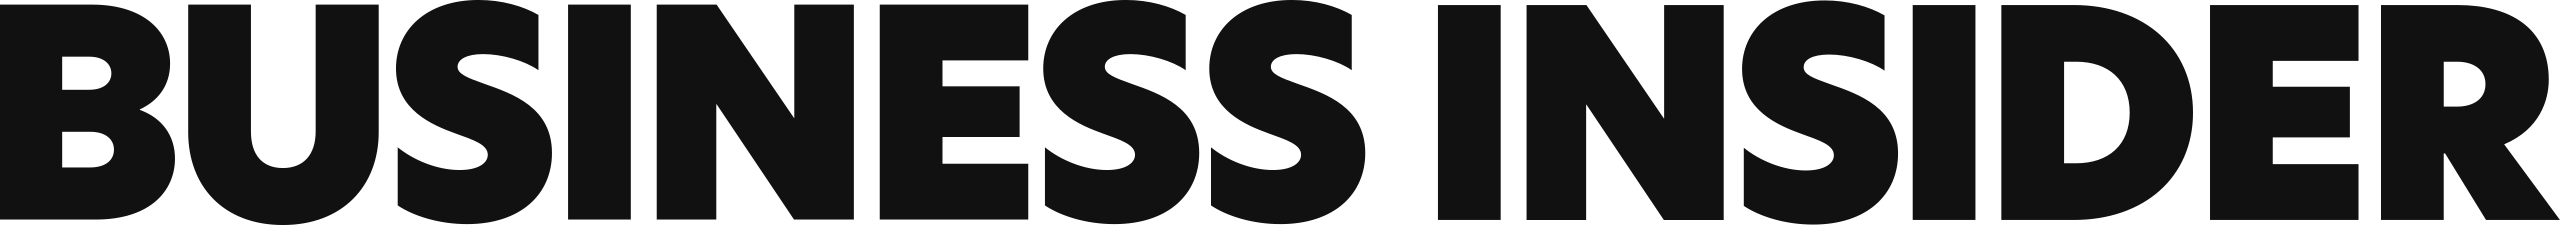 Business_Insider logo